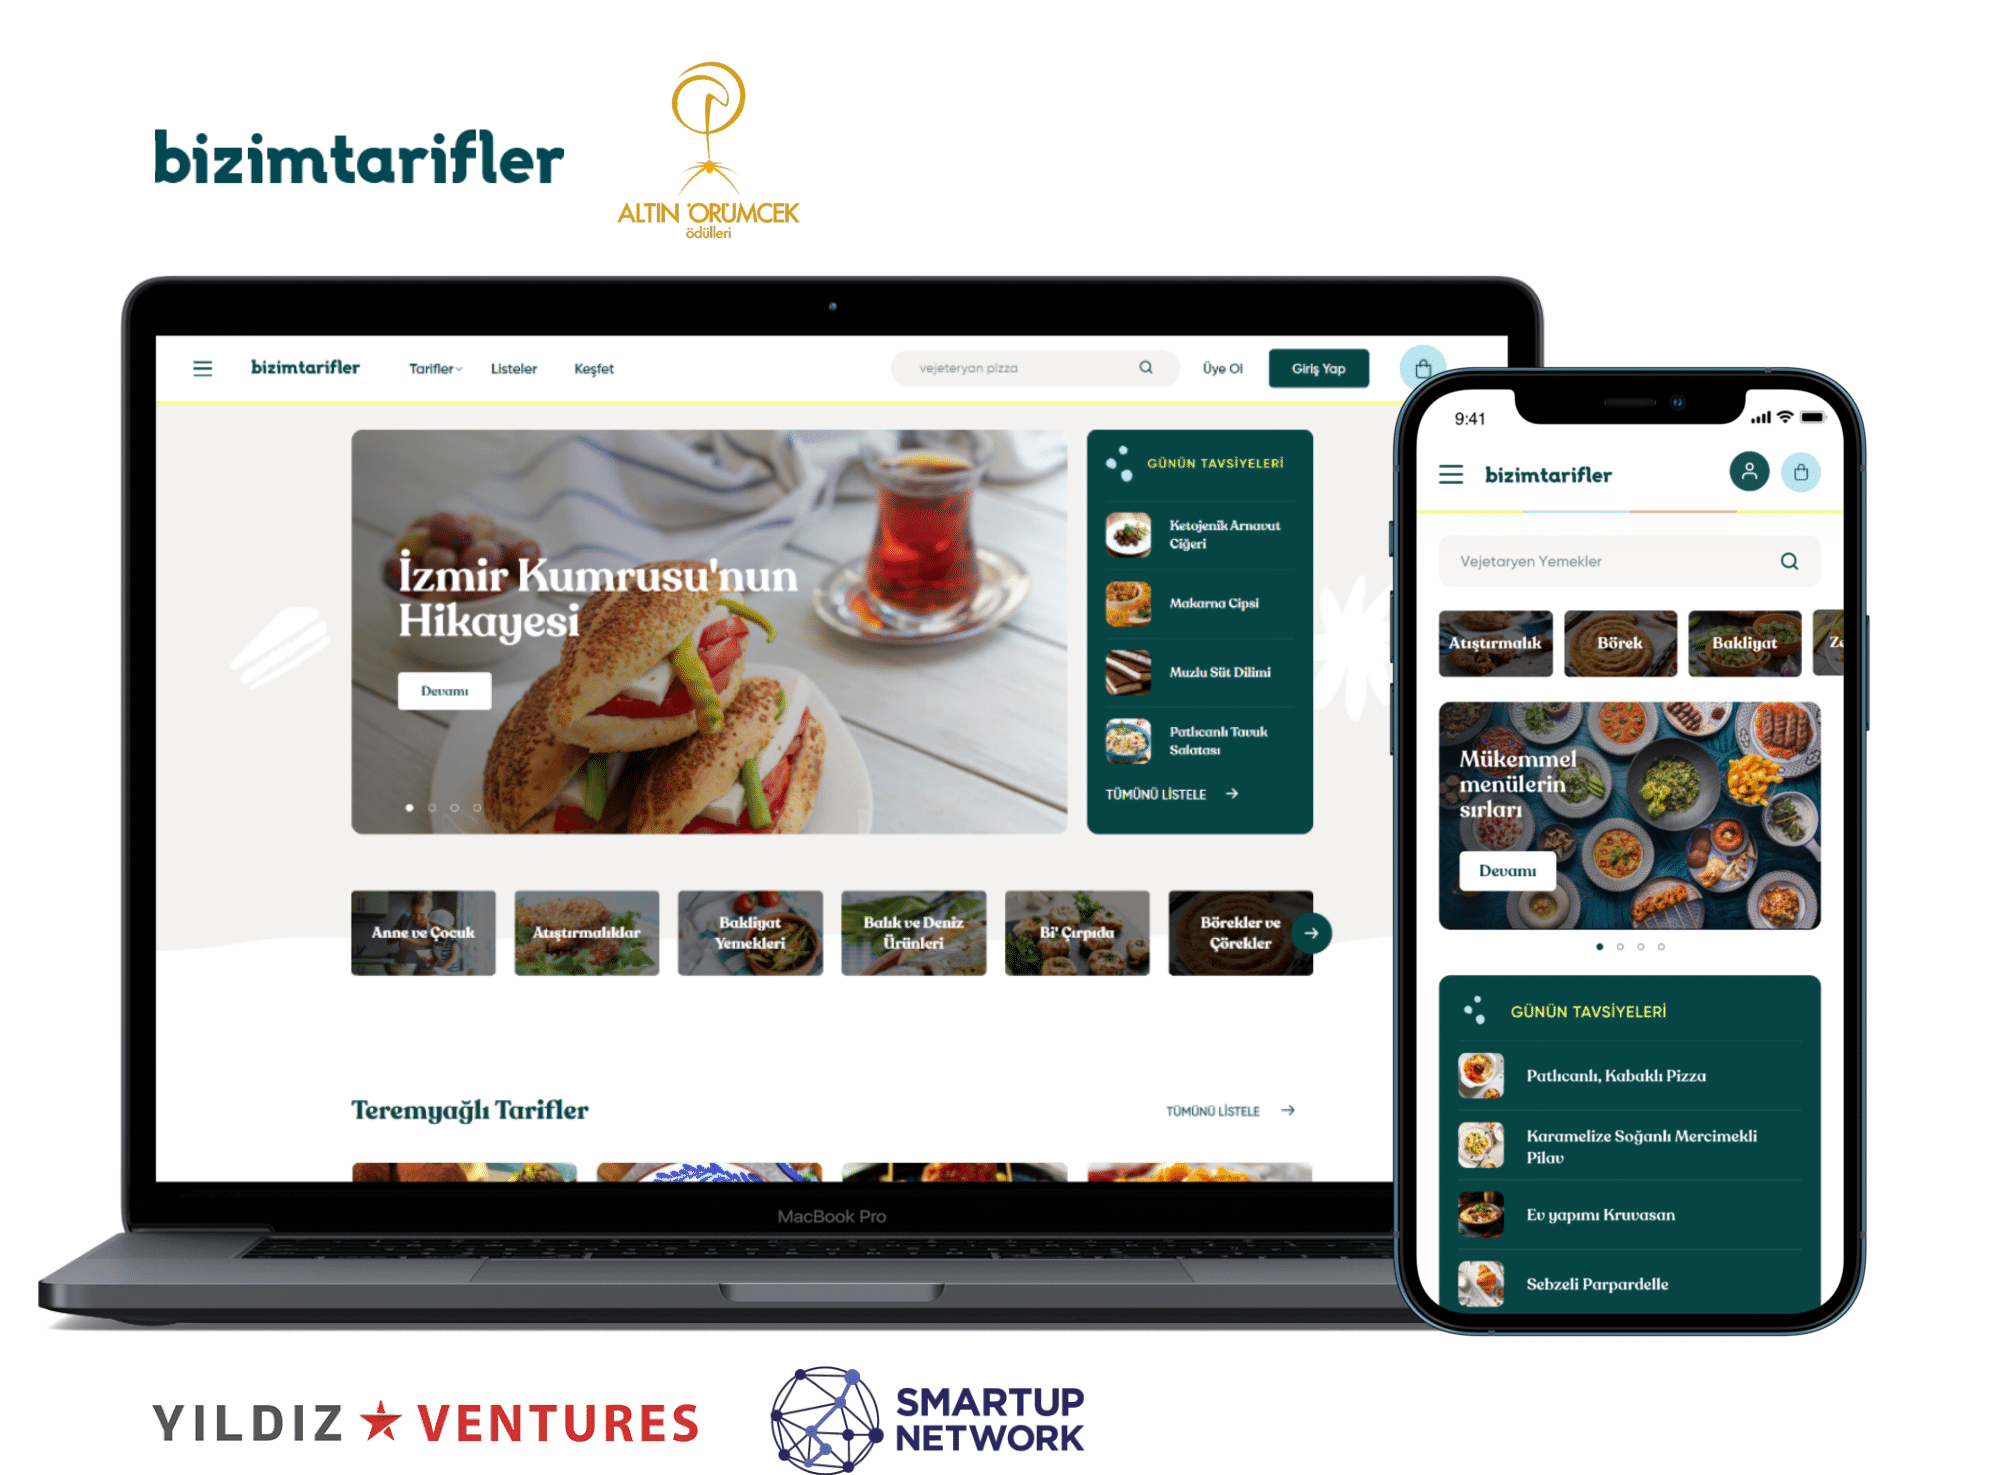 bizimtarifler.com web site and mobile app homepage screenshots